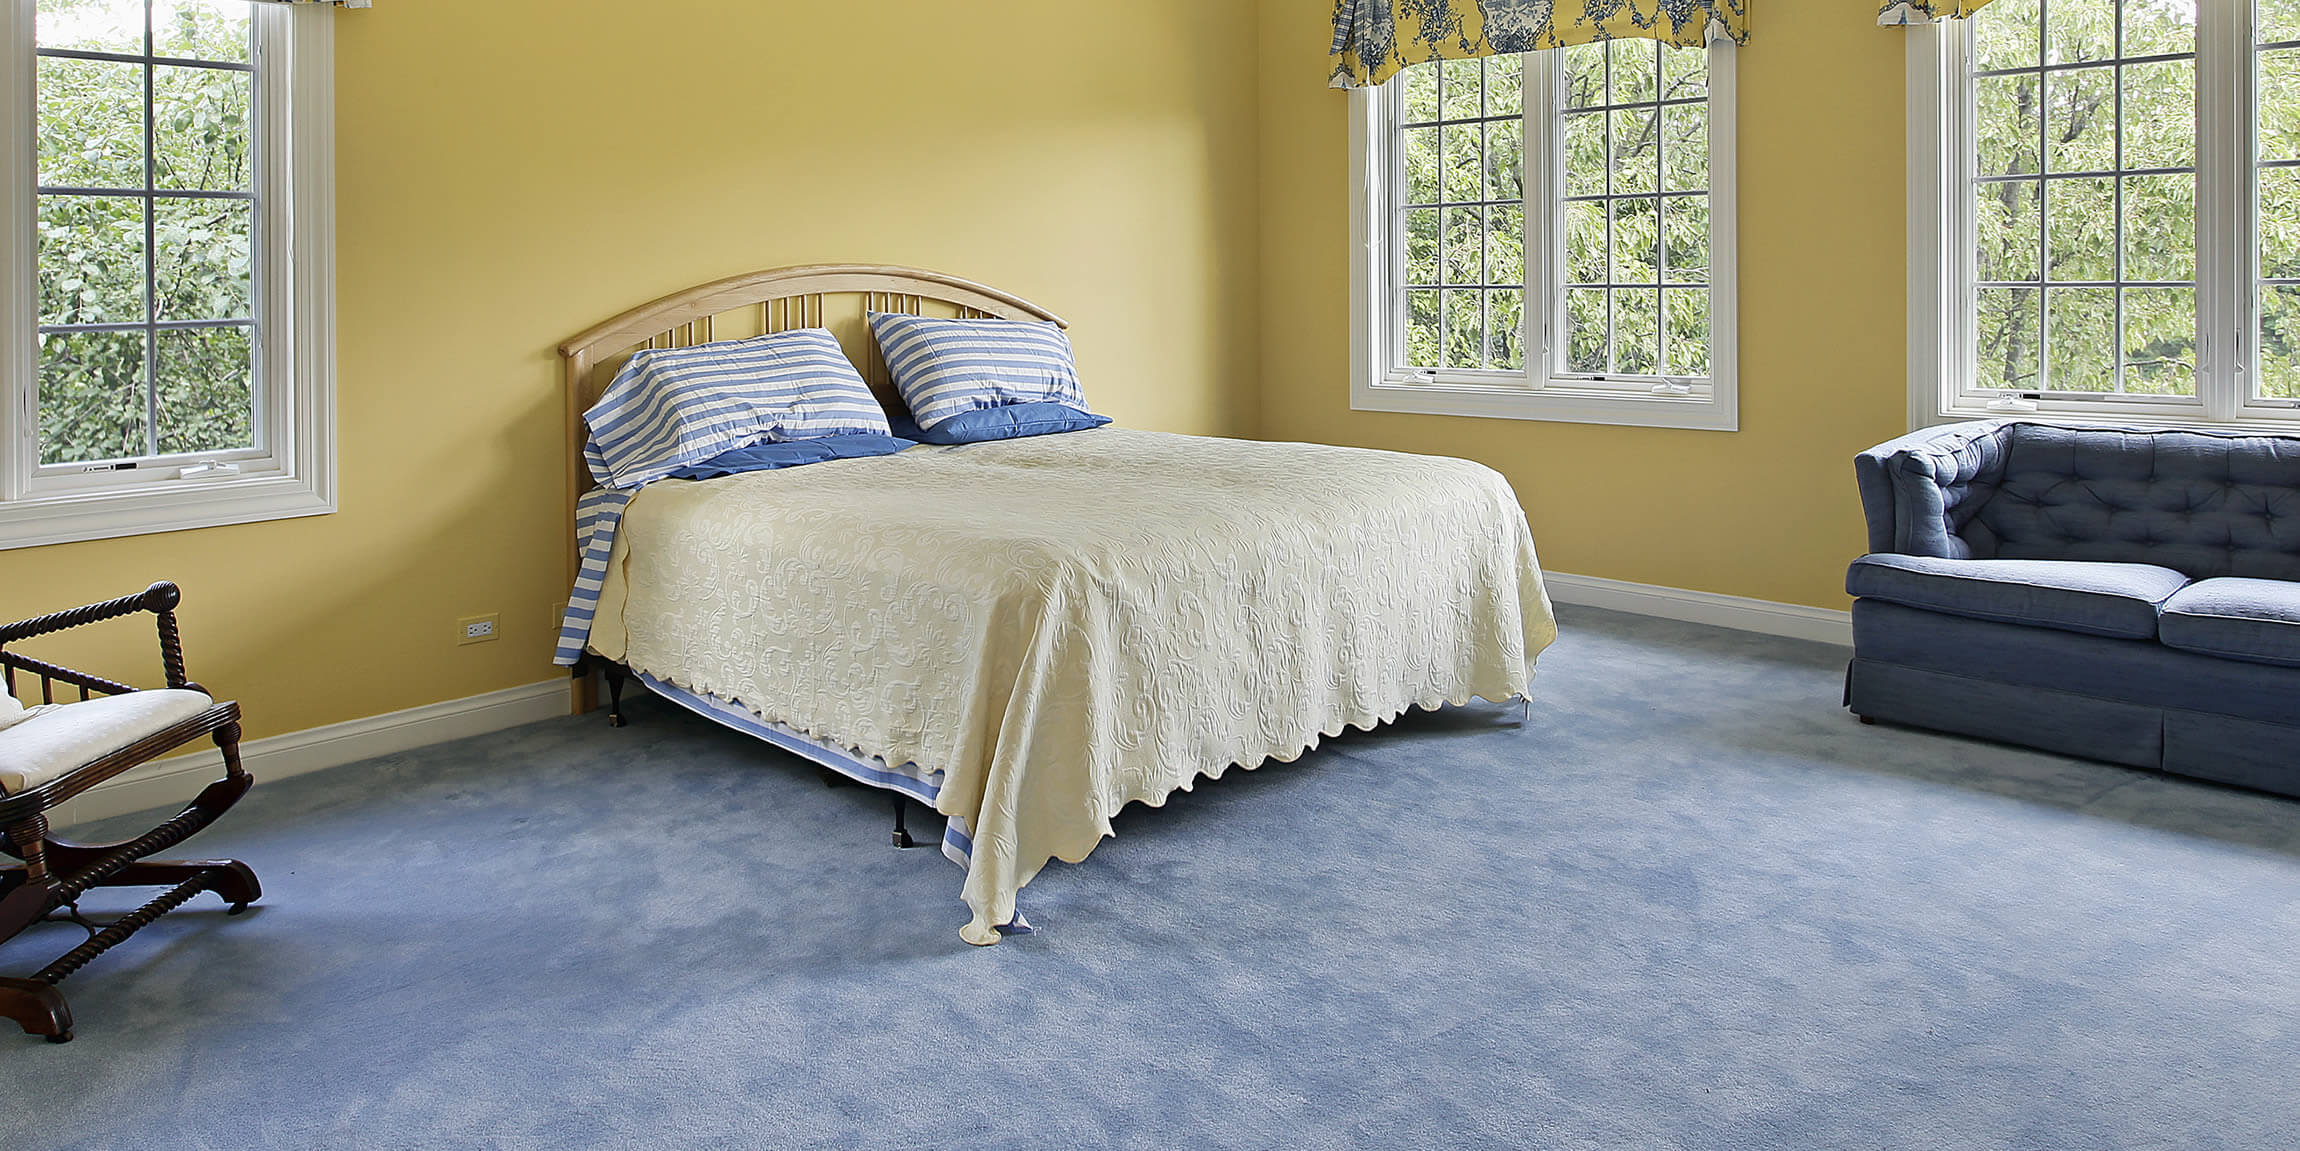 blue carpet on bedroom floor